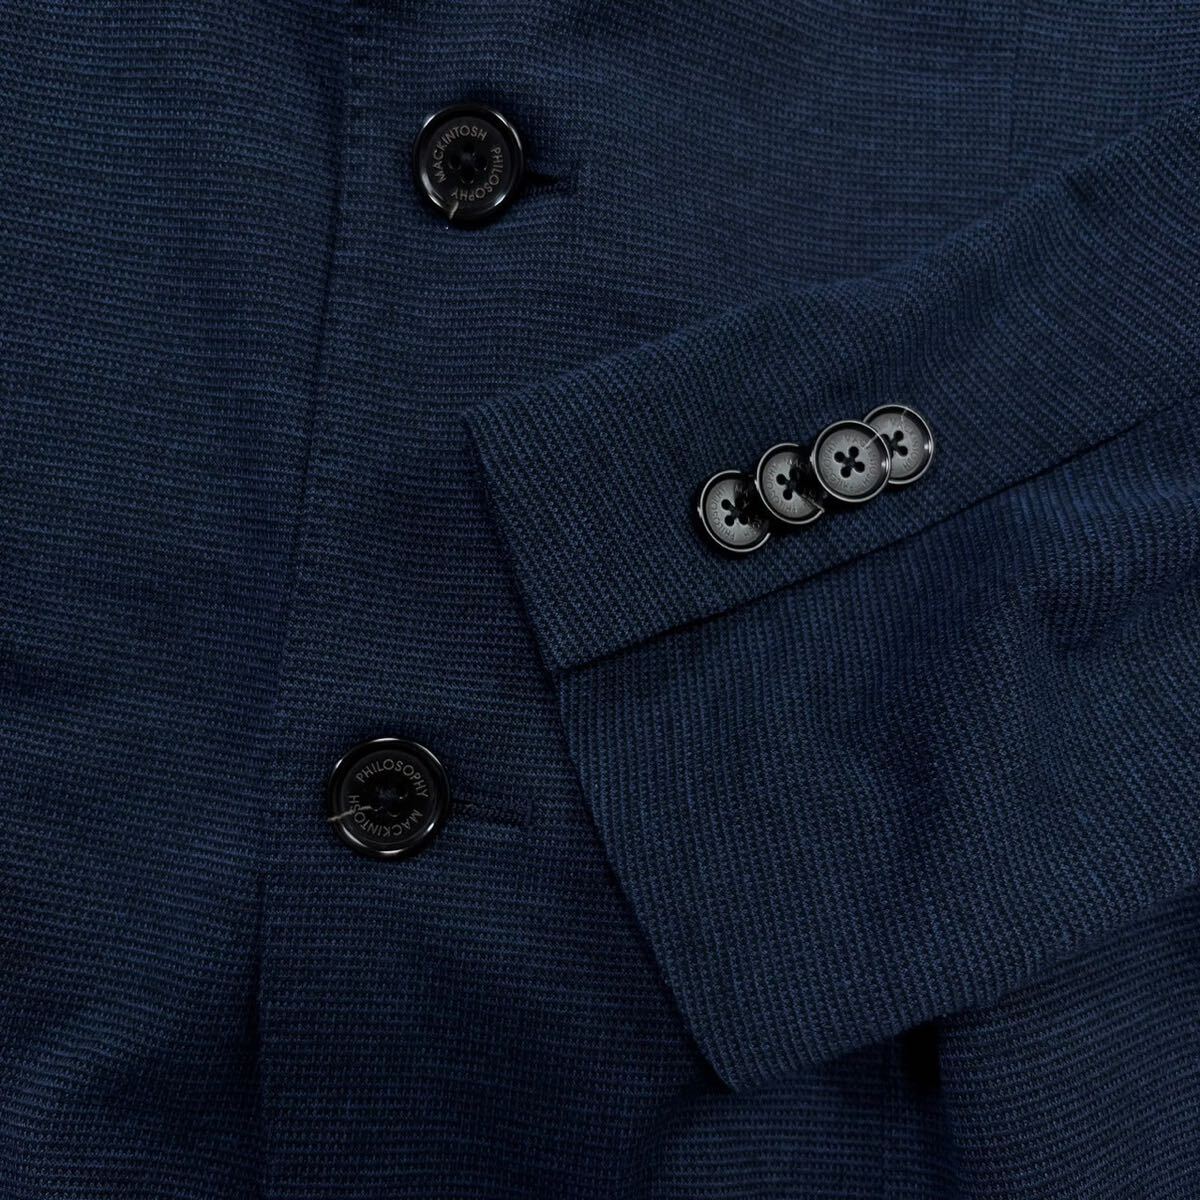  Macintosh firosofi-[ overflow feeling of luxury ]MACKINTOSH suit setup tailored jacket stretch navy M rank 